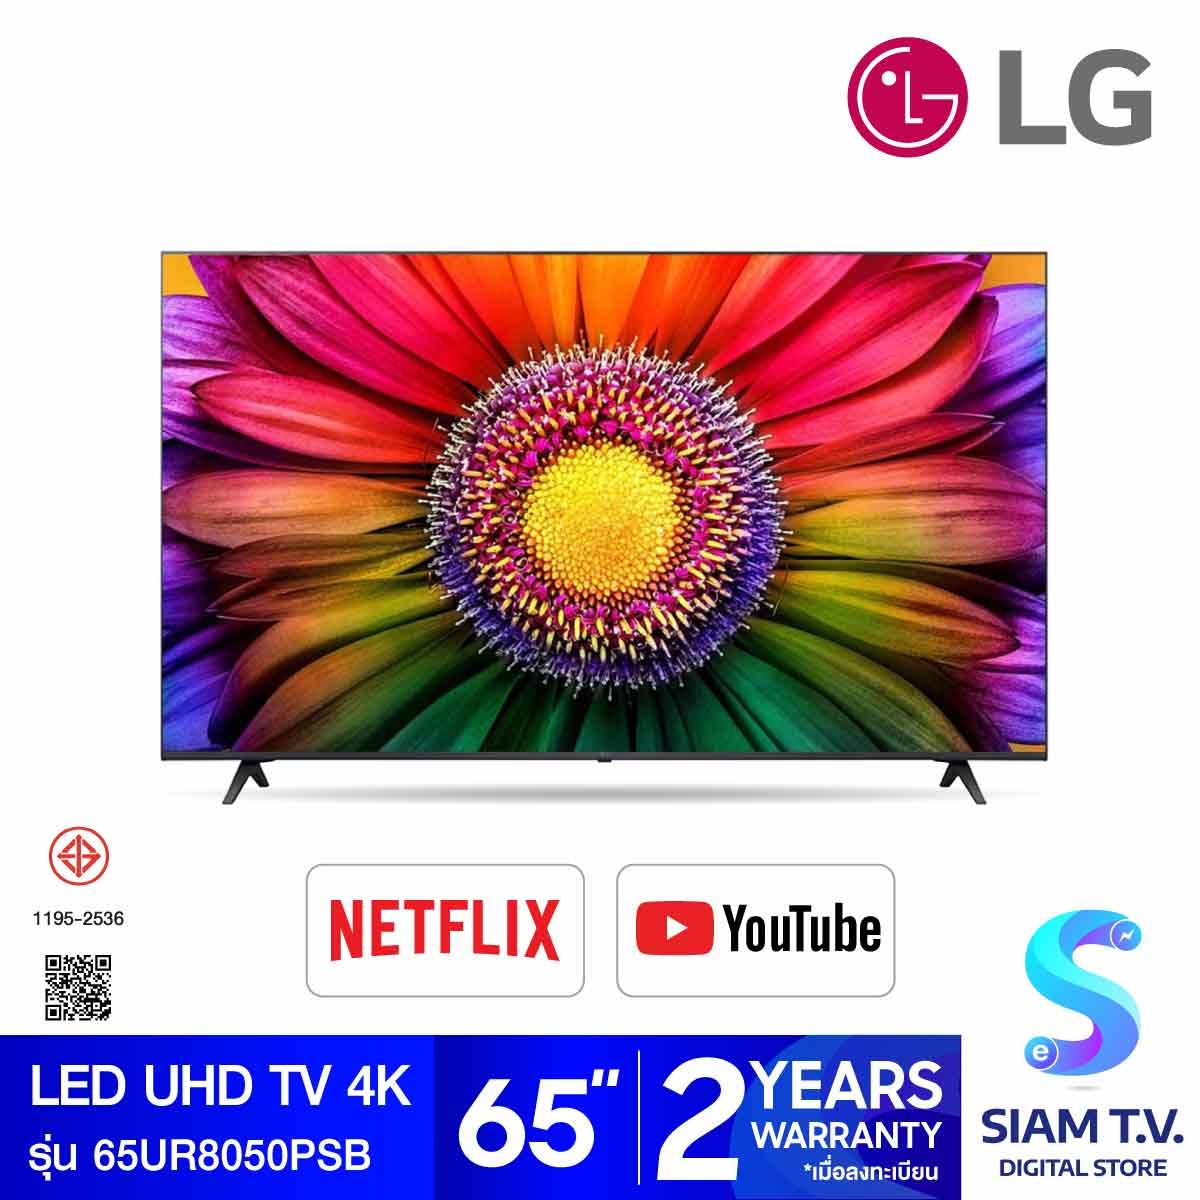 LG LED Smart TV 4K รุ่น 65UR8050PSB Magic Remote LG ThinQ AI สมาร์ททีวีขนาด 65 นิ้ว ปี2023